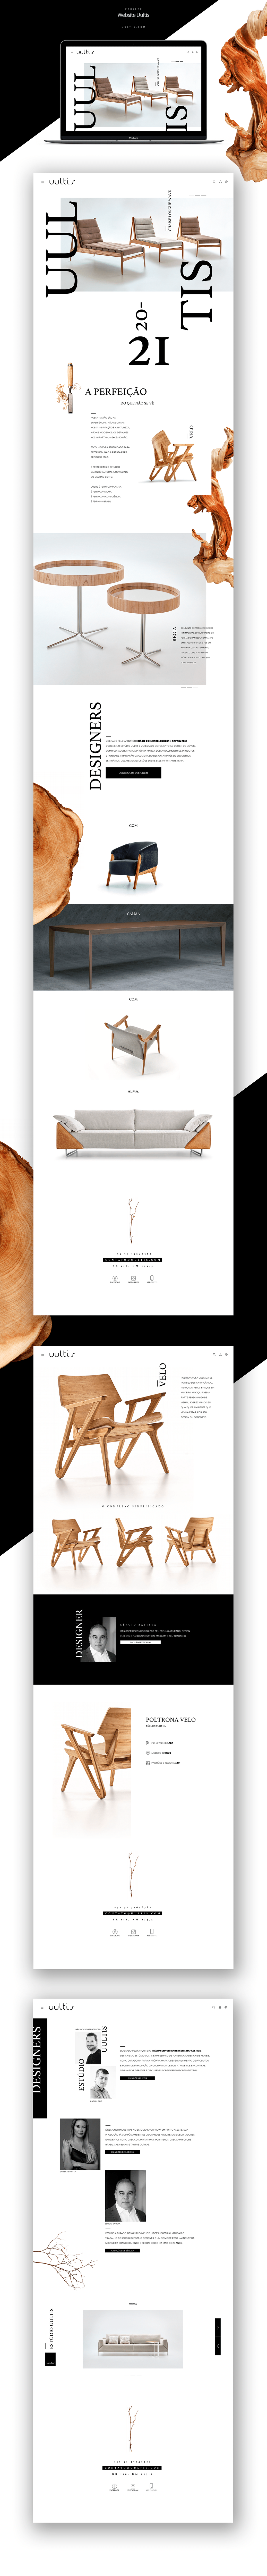 furniture design  Interior modern design visual identity UI/UX